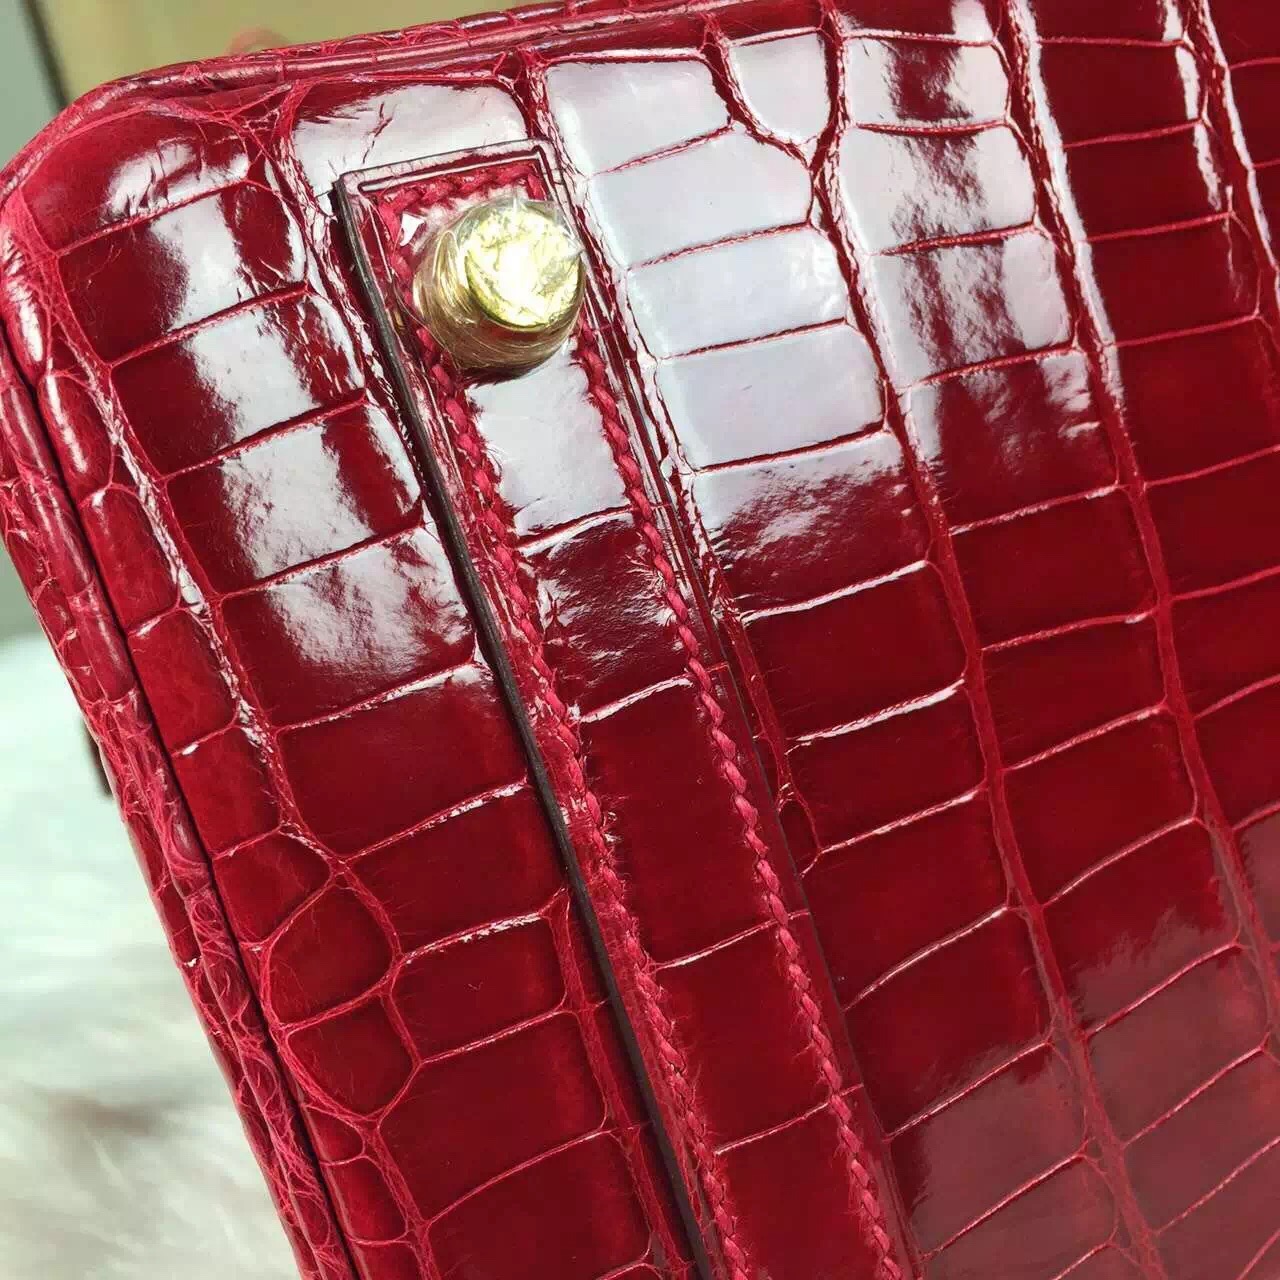 High Quality Hermes HCP Crocodile Skin Leather Birkin Bag25cm in Chinese Red